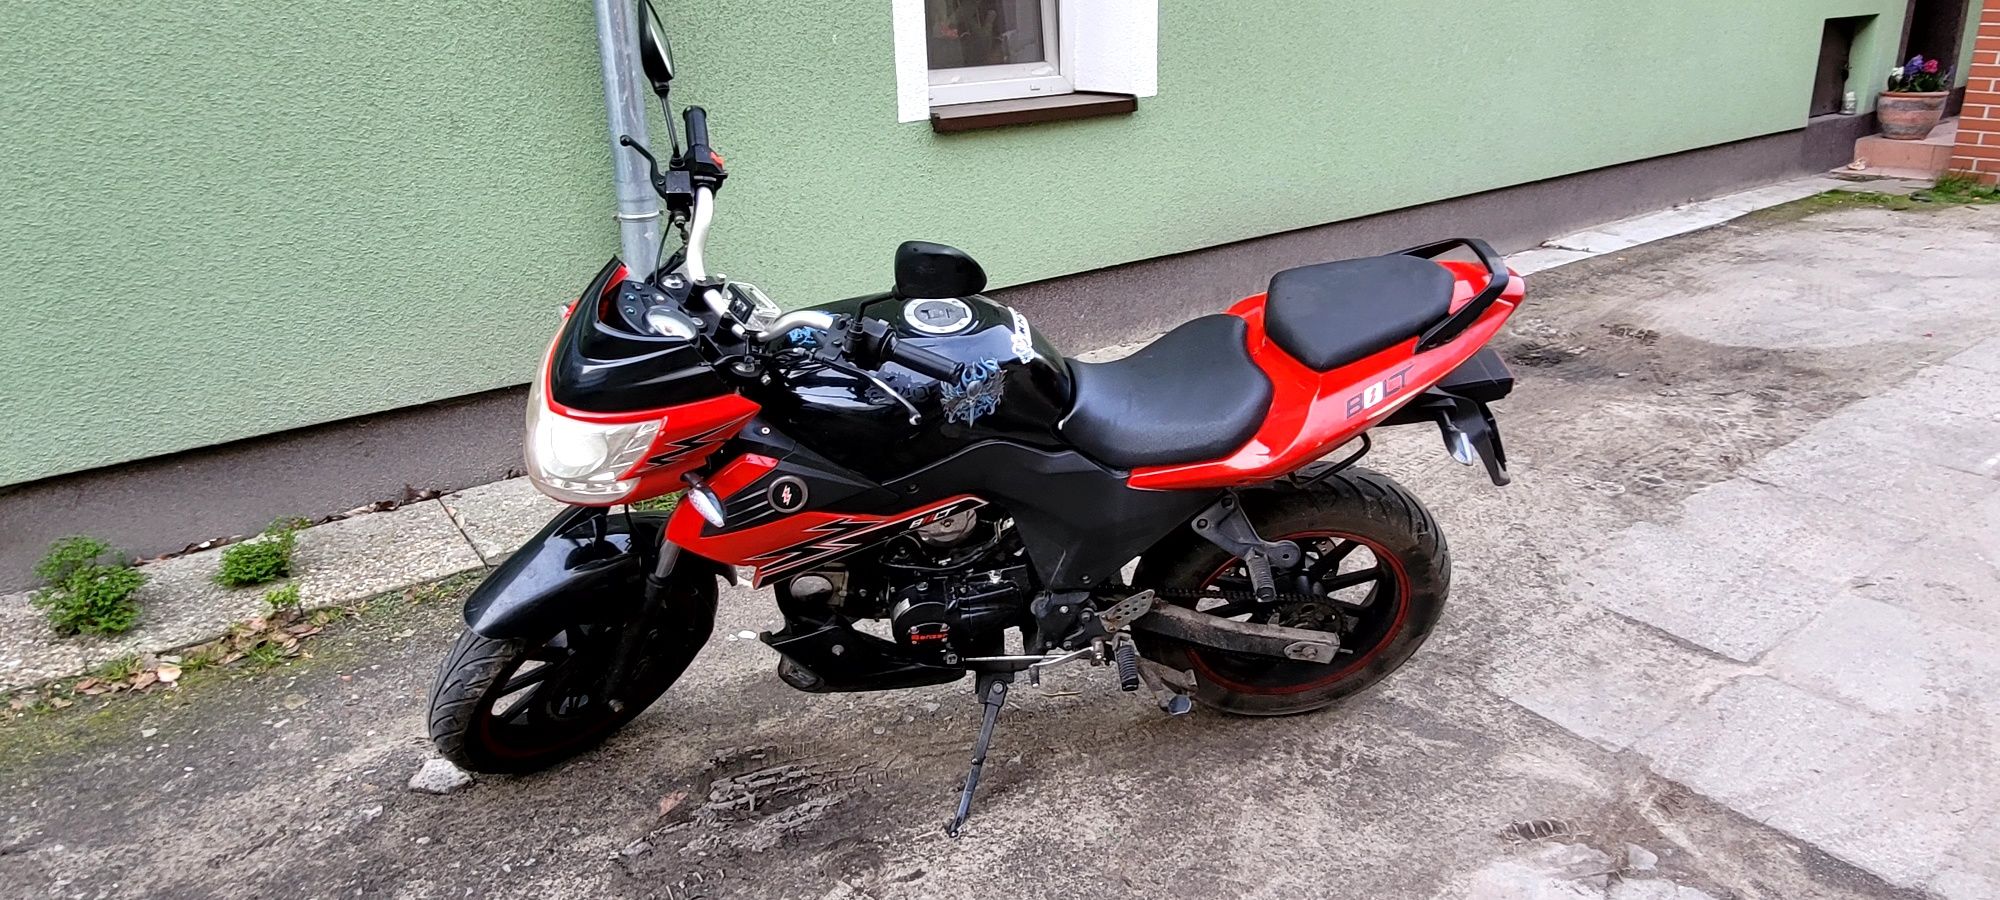 Yamasaki YM50-9D motorower motocykl bdb stan !!!